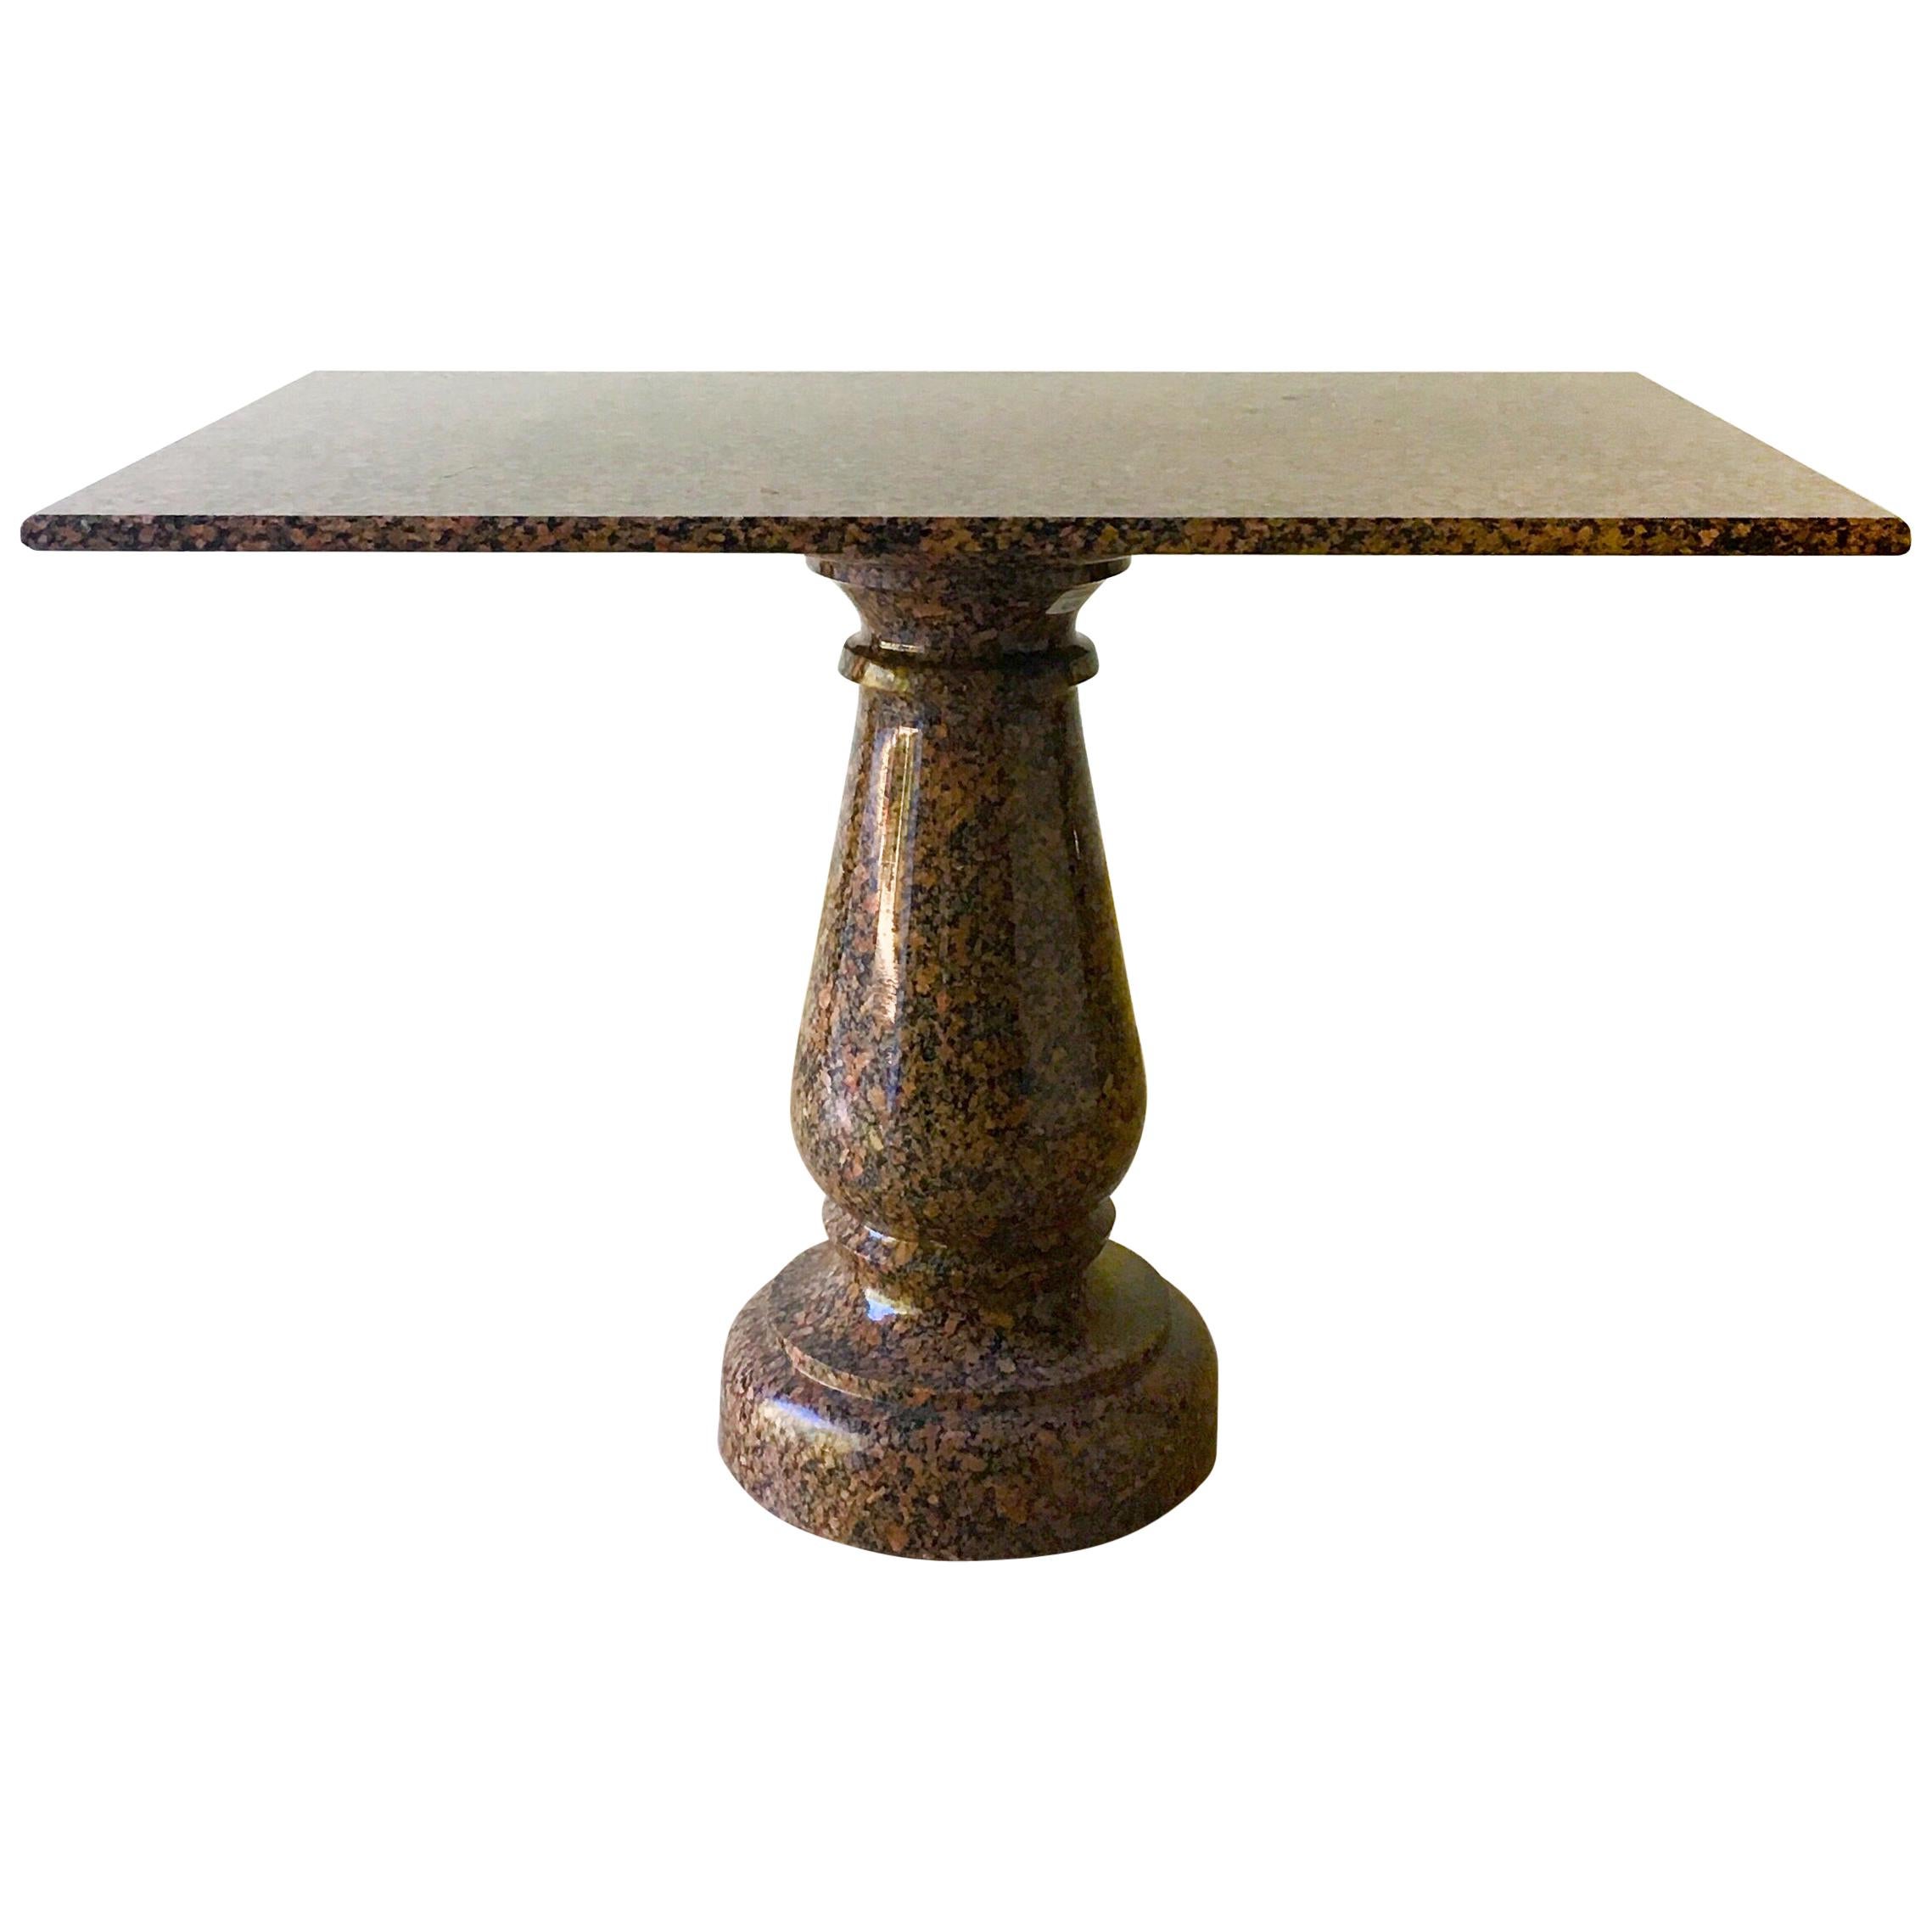 Polished Granite Centre Table, Swedish, circa 1835